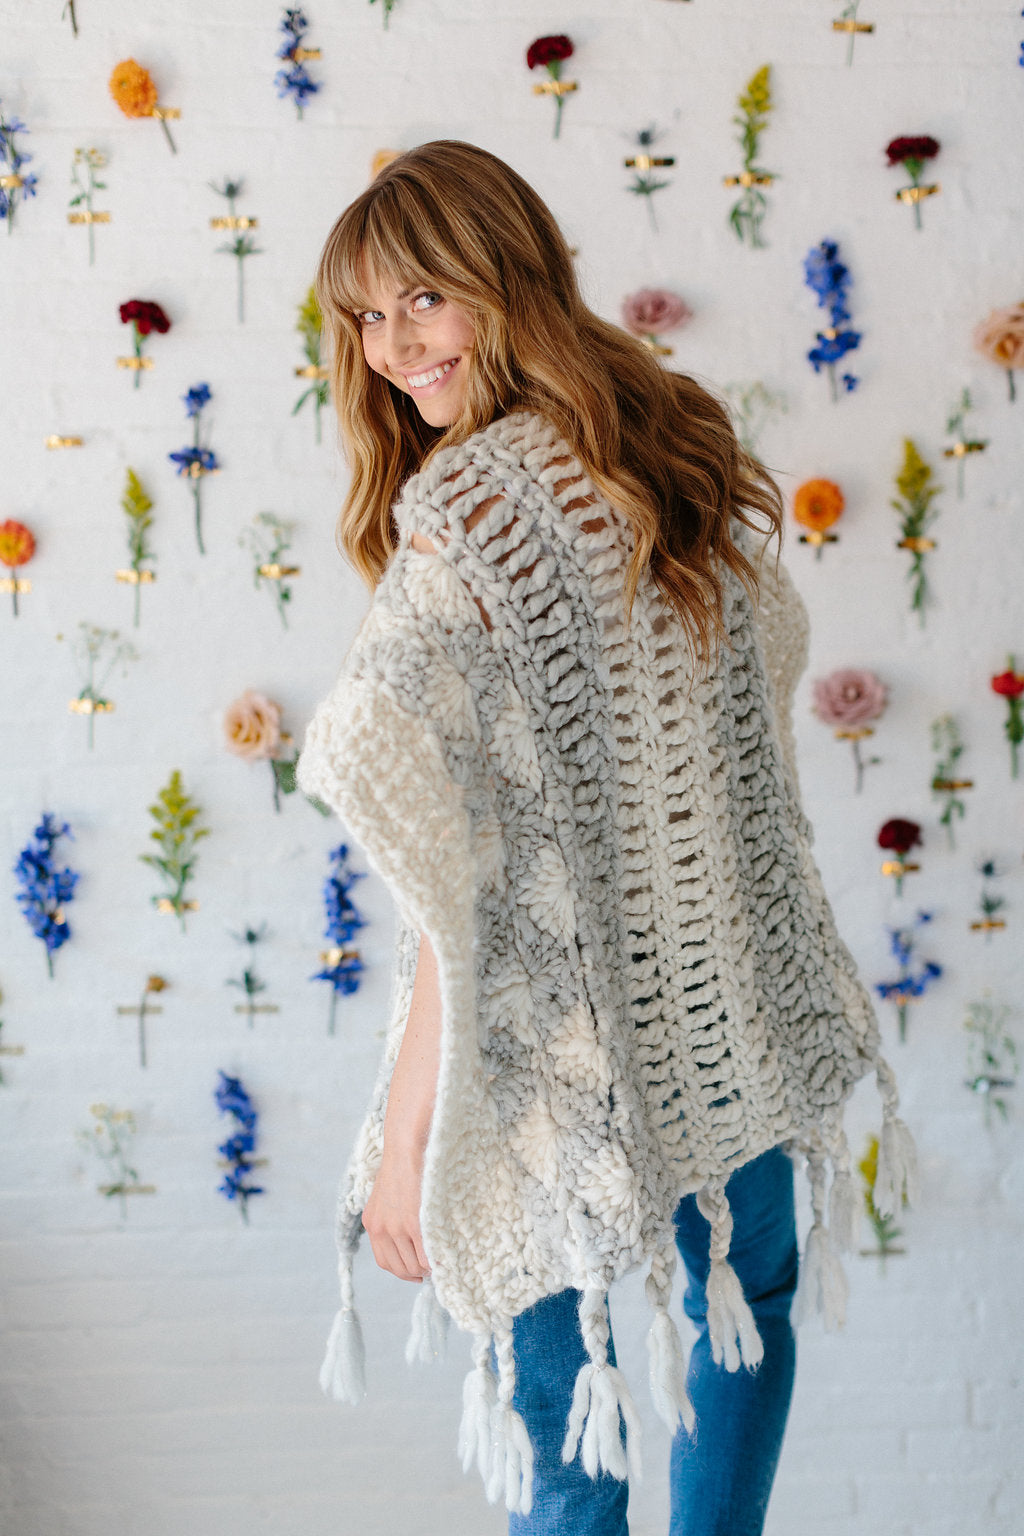 Knit Collage Starburst Cloud Poncho Pattern Crochet pattern for bulky chunky yarn